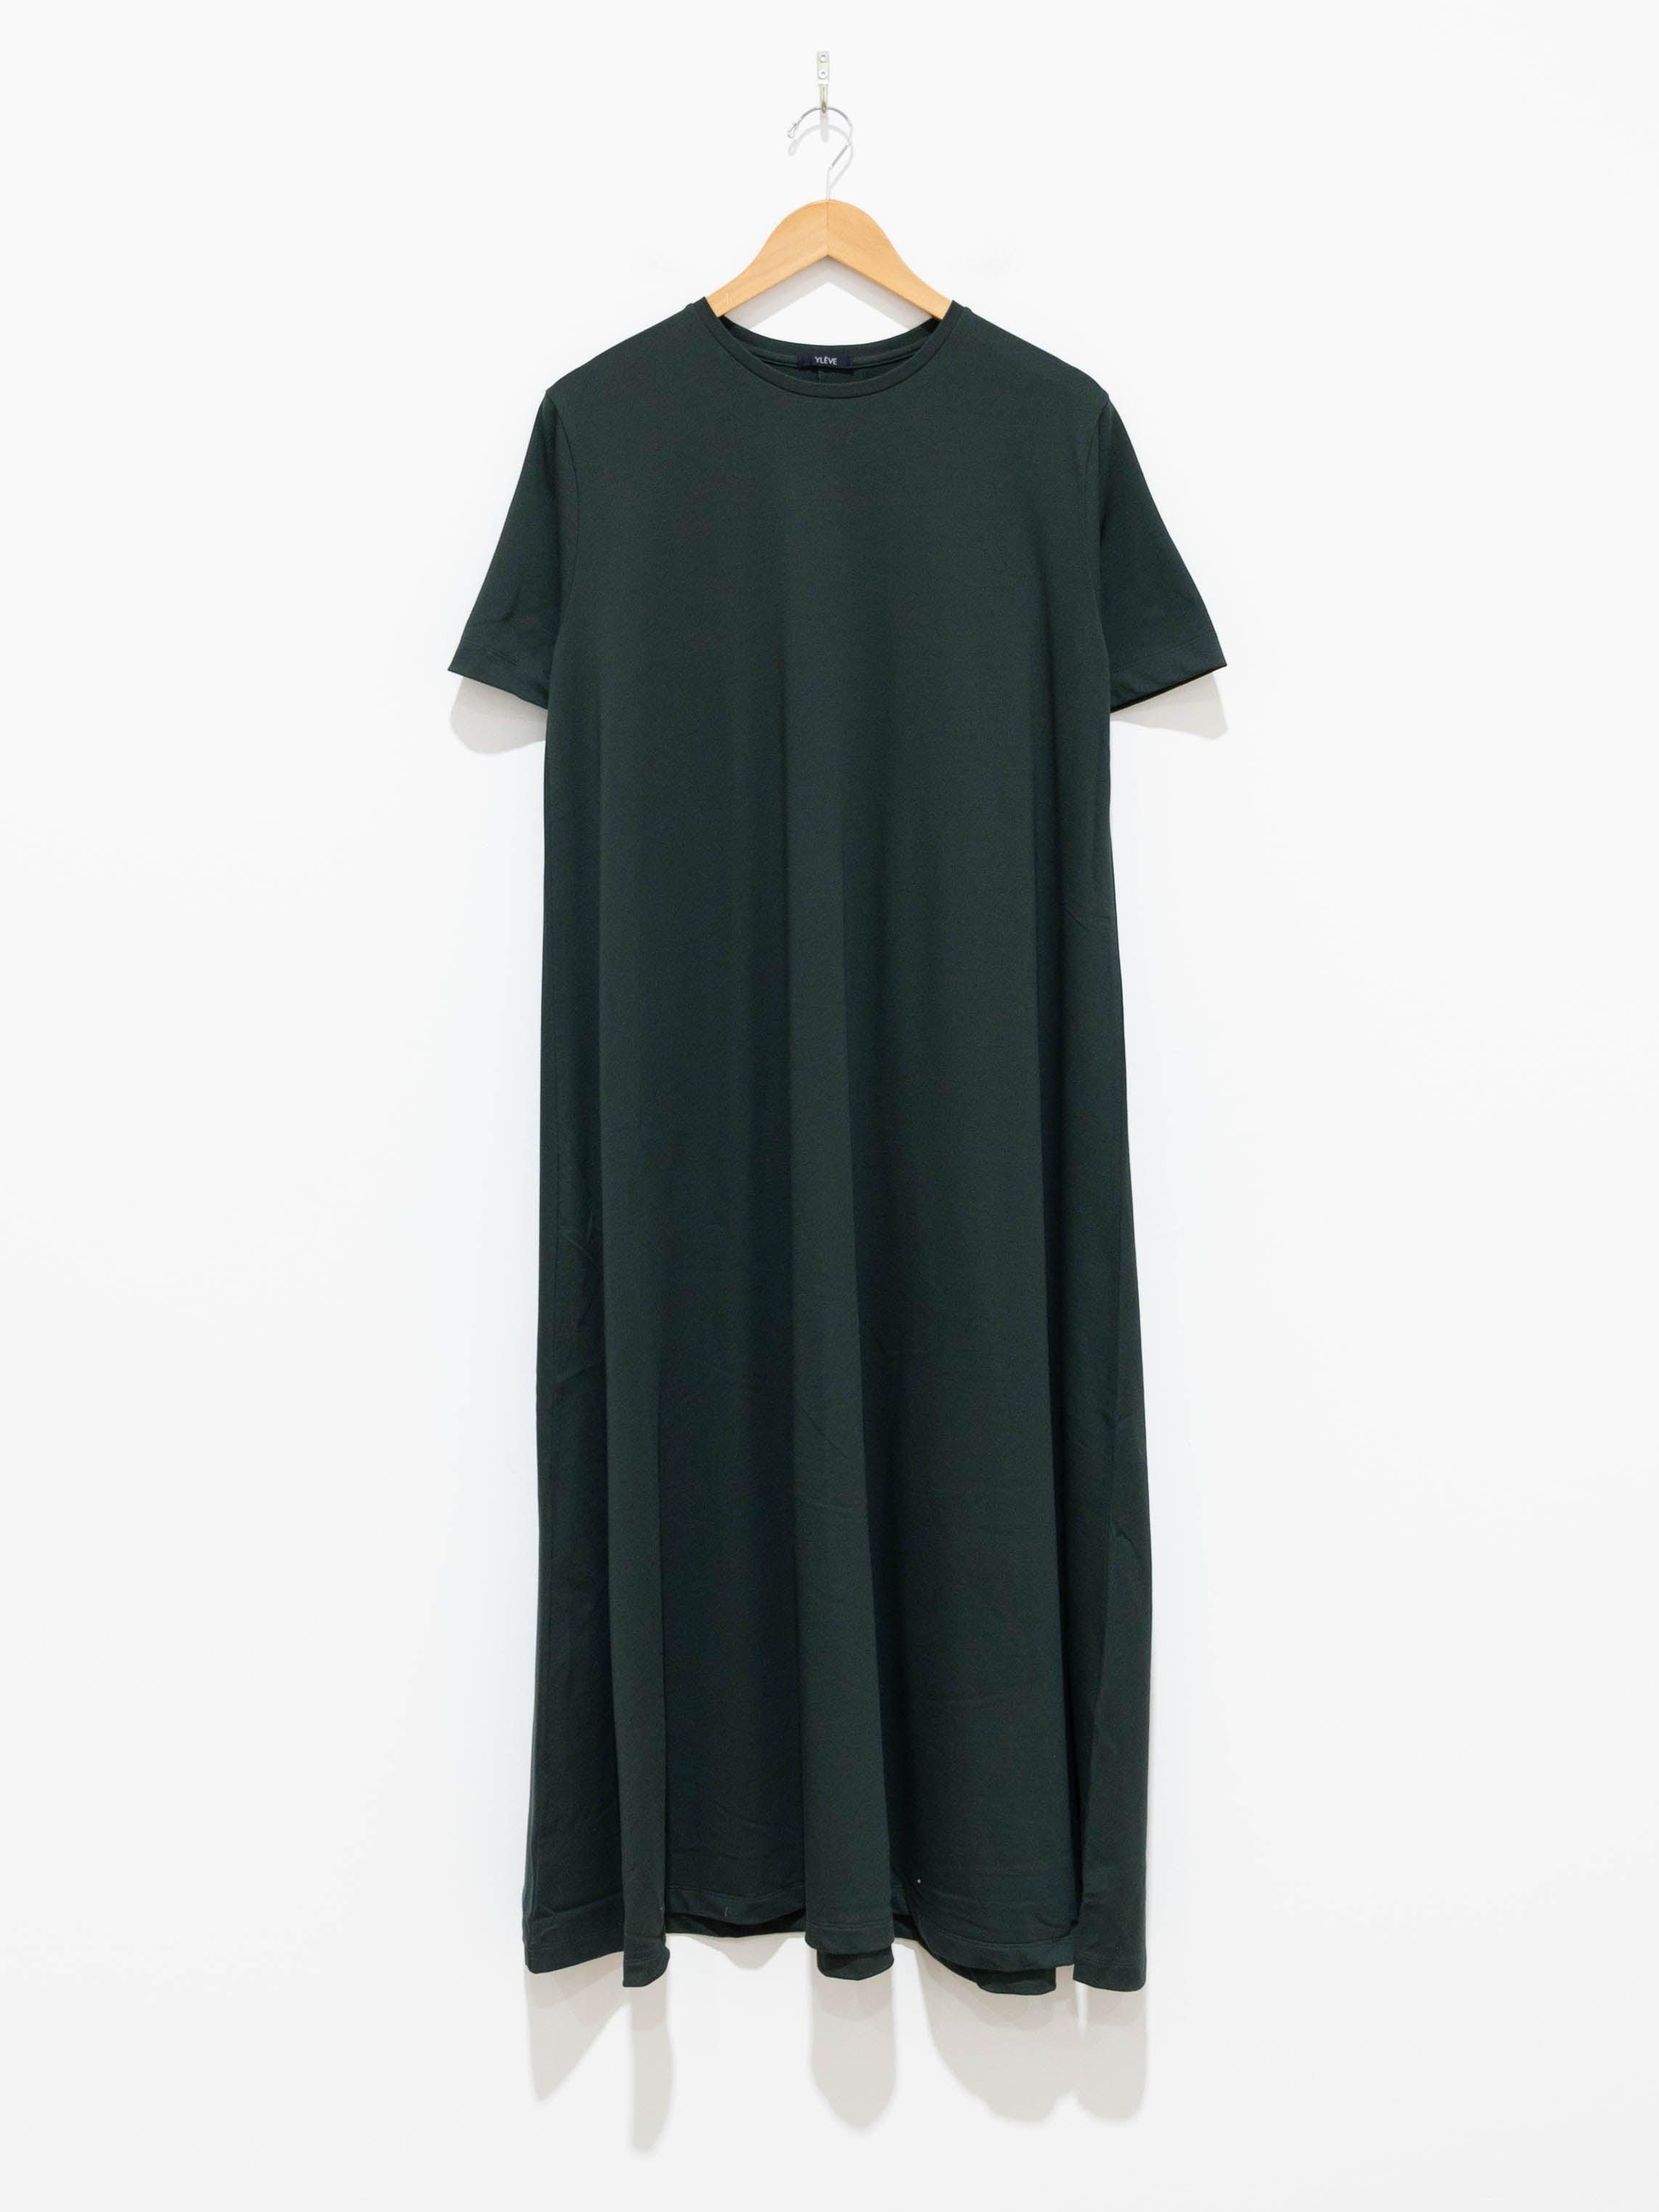 Namu Shop - Yleve Organic Cotton S/S Dress - Slate Green